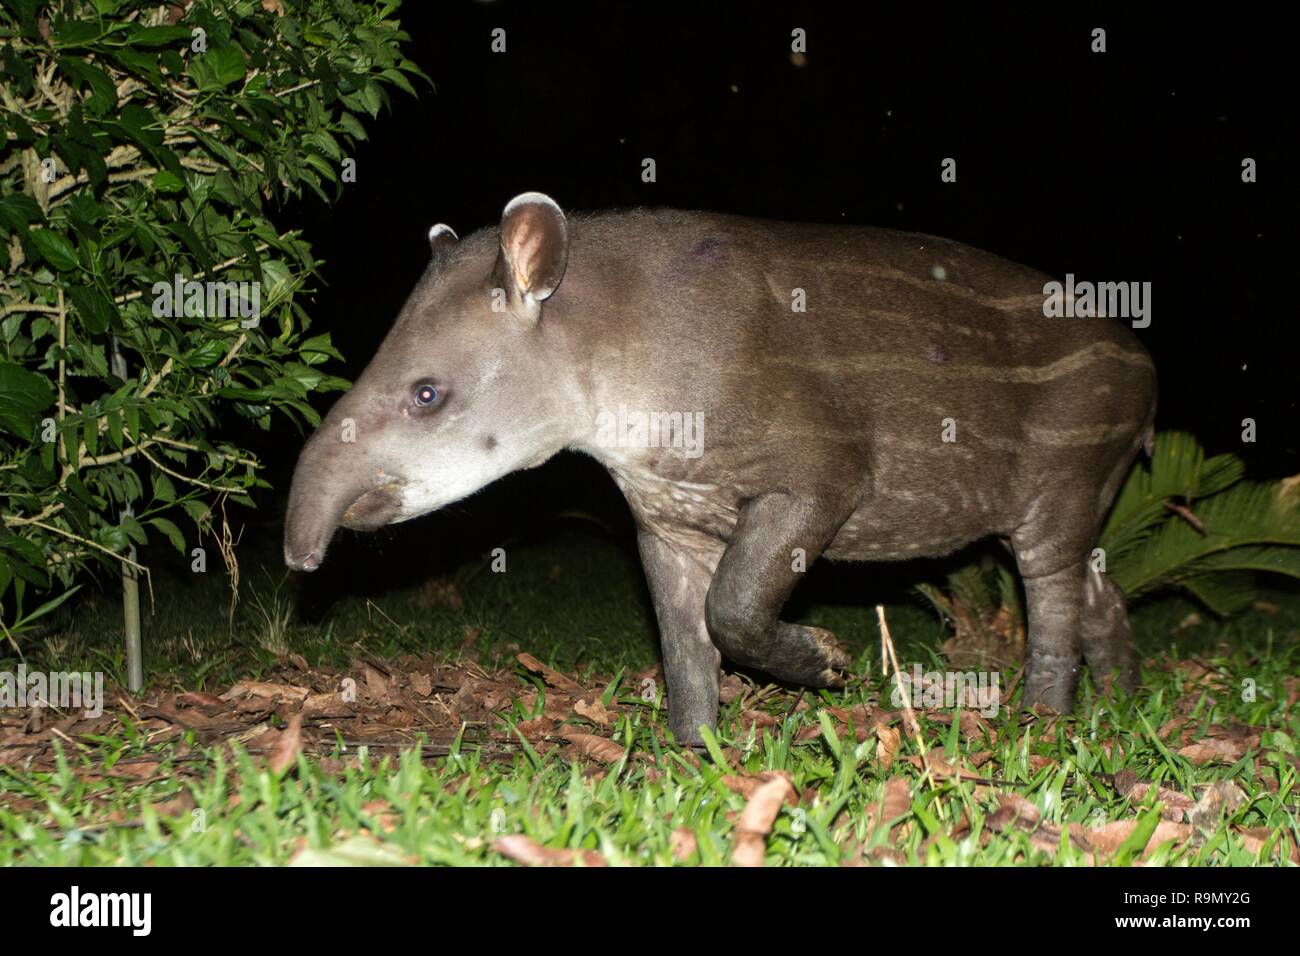 South American tapir (Tapirus terrestris) in natural habitat during night,  cute baby animal with stripes, portrait of rare animal from Peru, amazonia  Stock Photo - Alamy